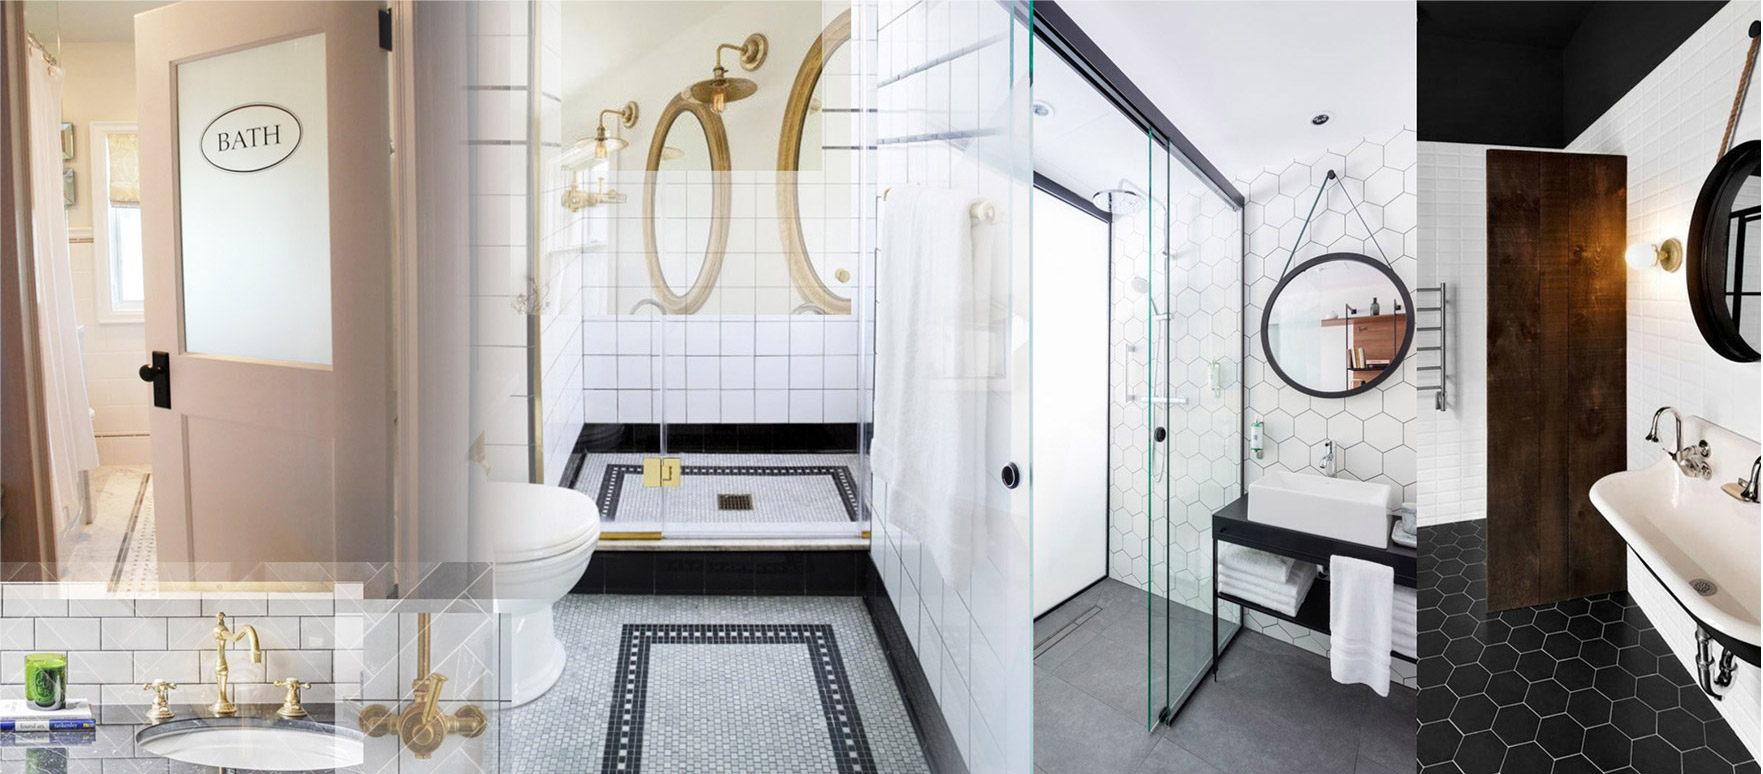 Design concept for Santa Rita Hotel bathrooms, black tile, white walls, glass showers.